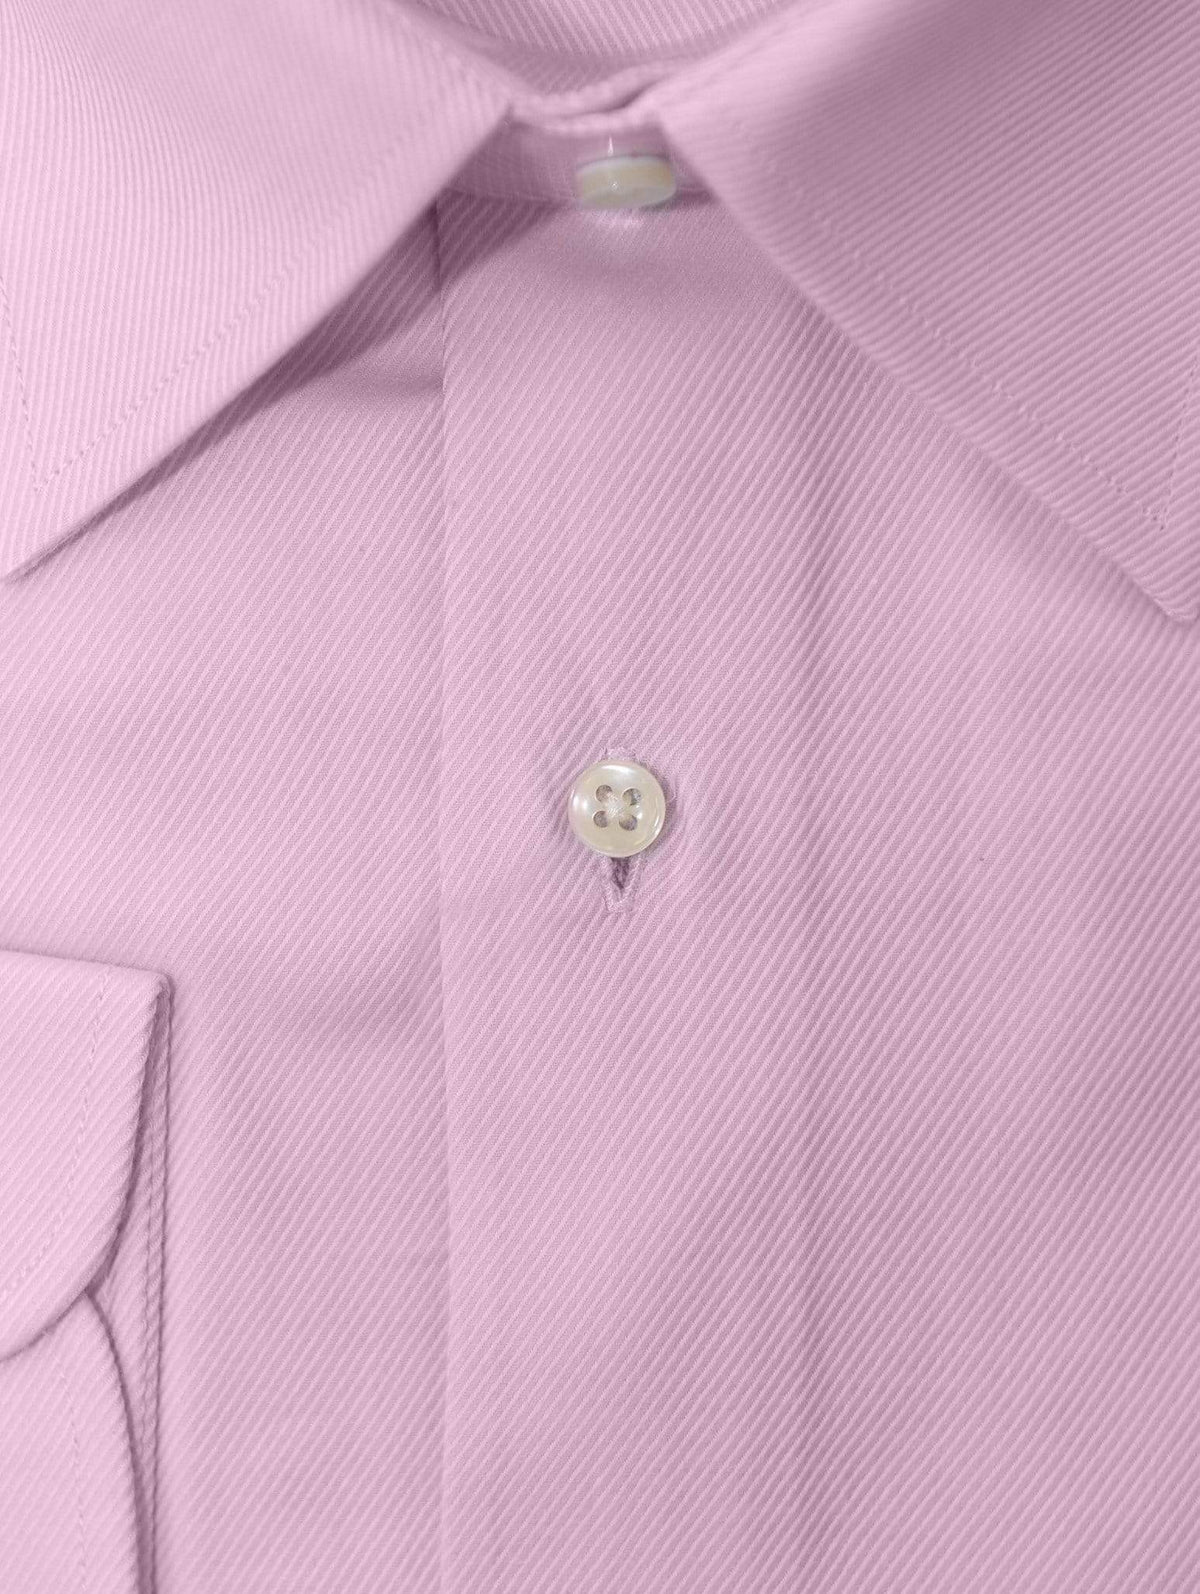 Chams SHIRTS Chams Classic Fit Light Purple Twill Fine Combed Cotton Dress Shirt